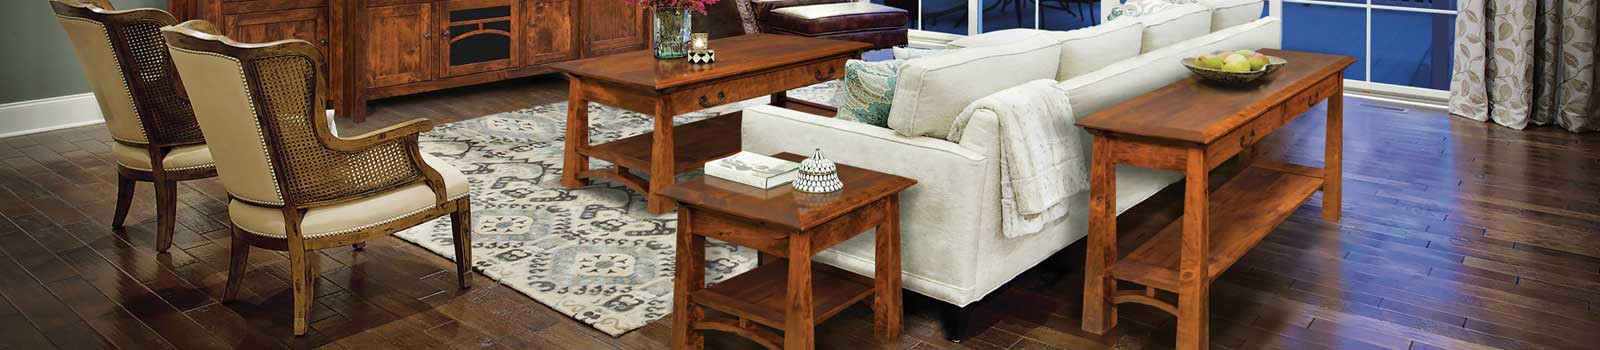 amish living room furniture on offer